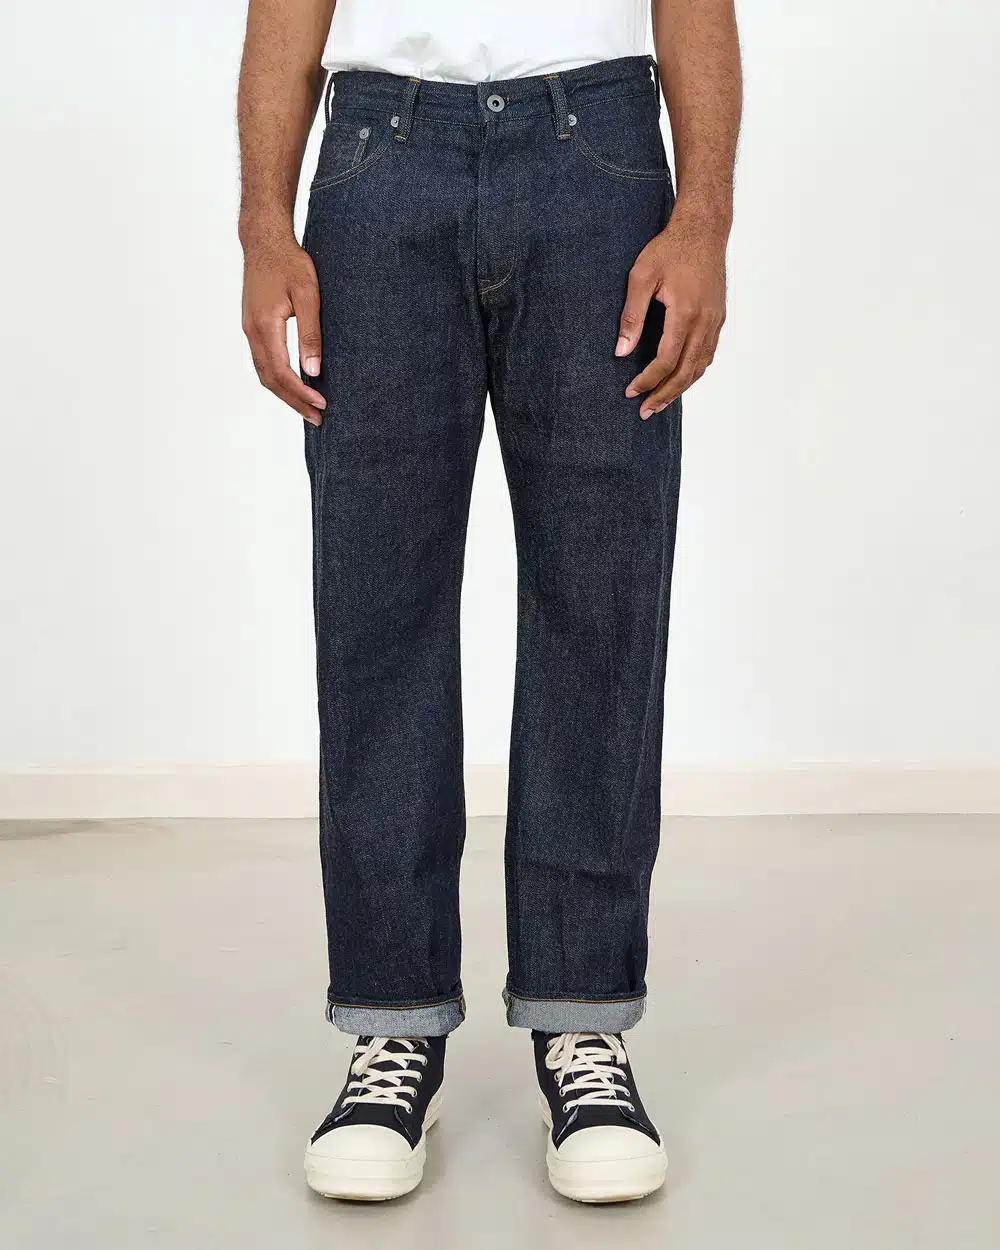 Milestone Basement Oudon Jeans